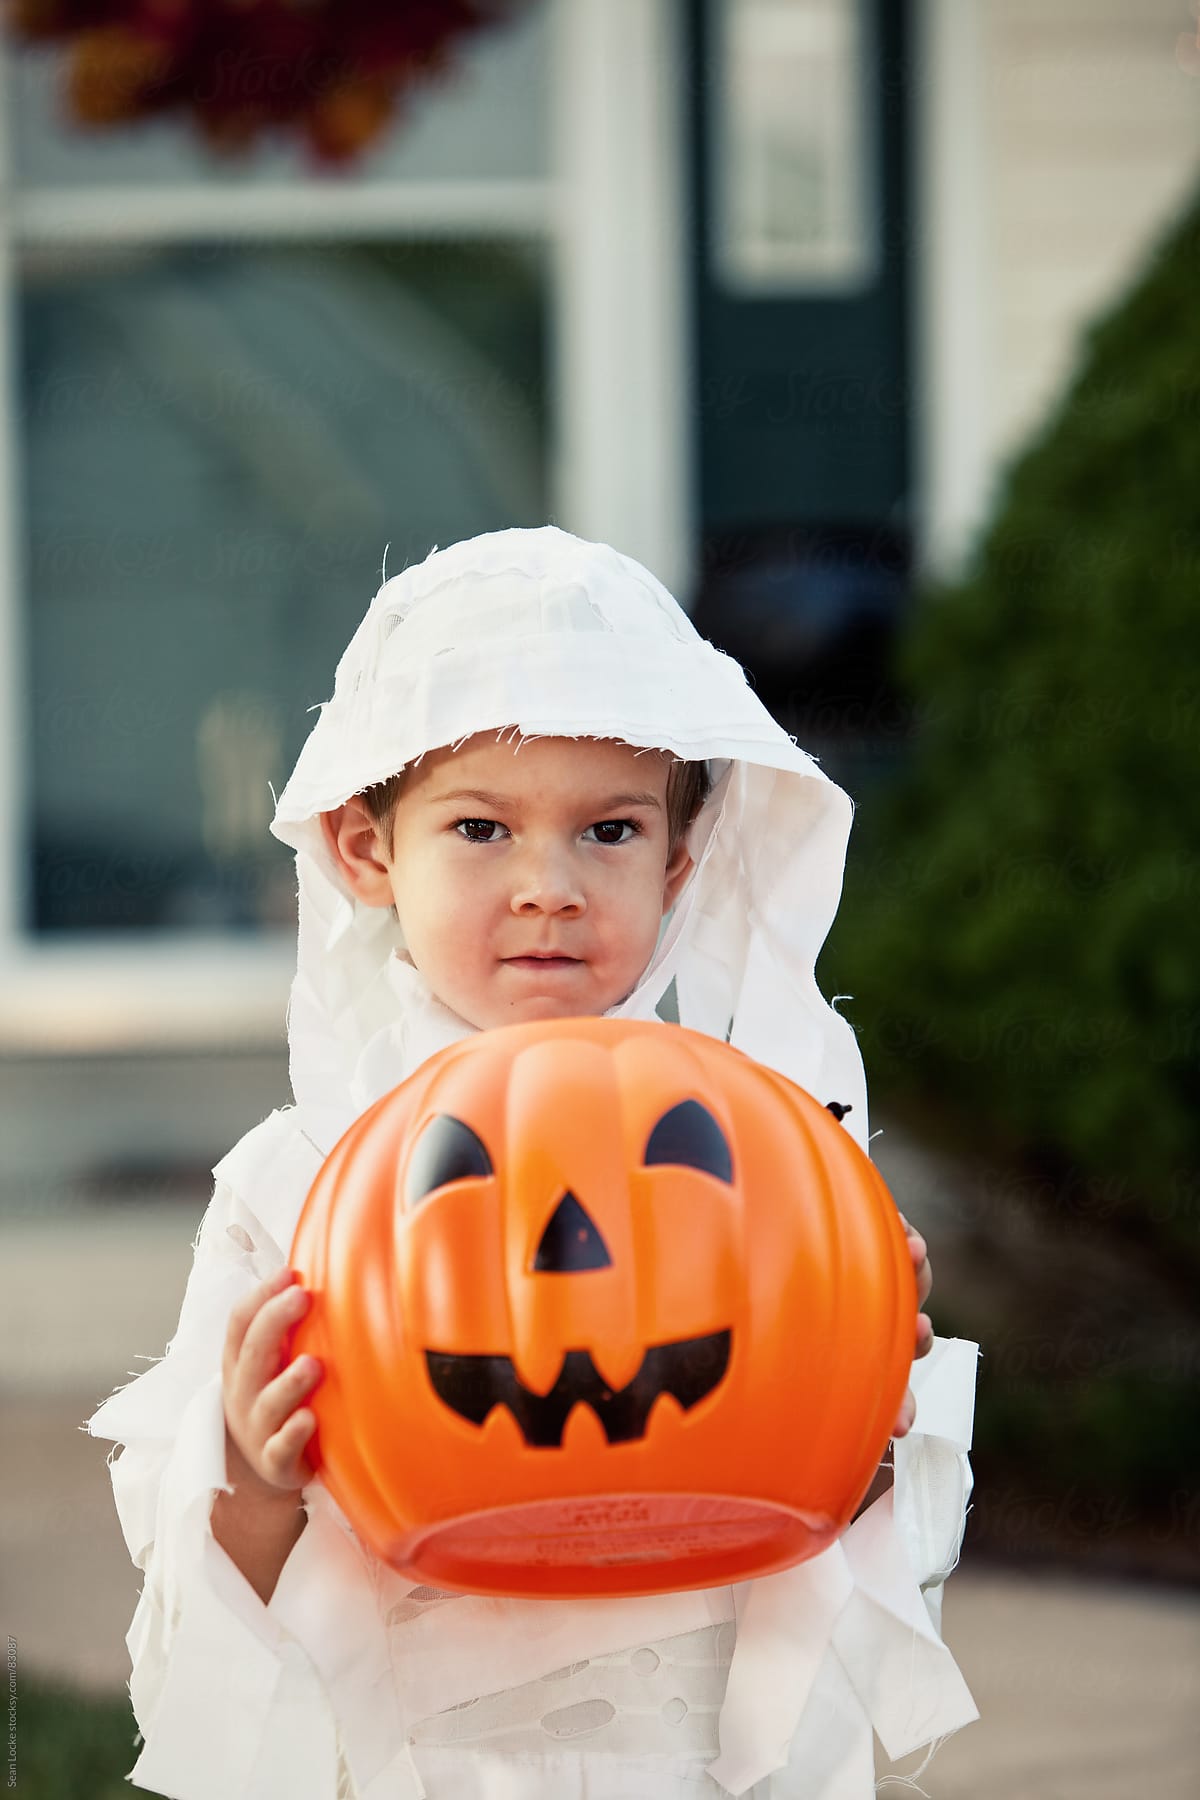 Halloween: Little Boy With Candy Bucket